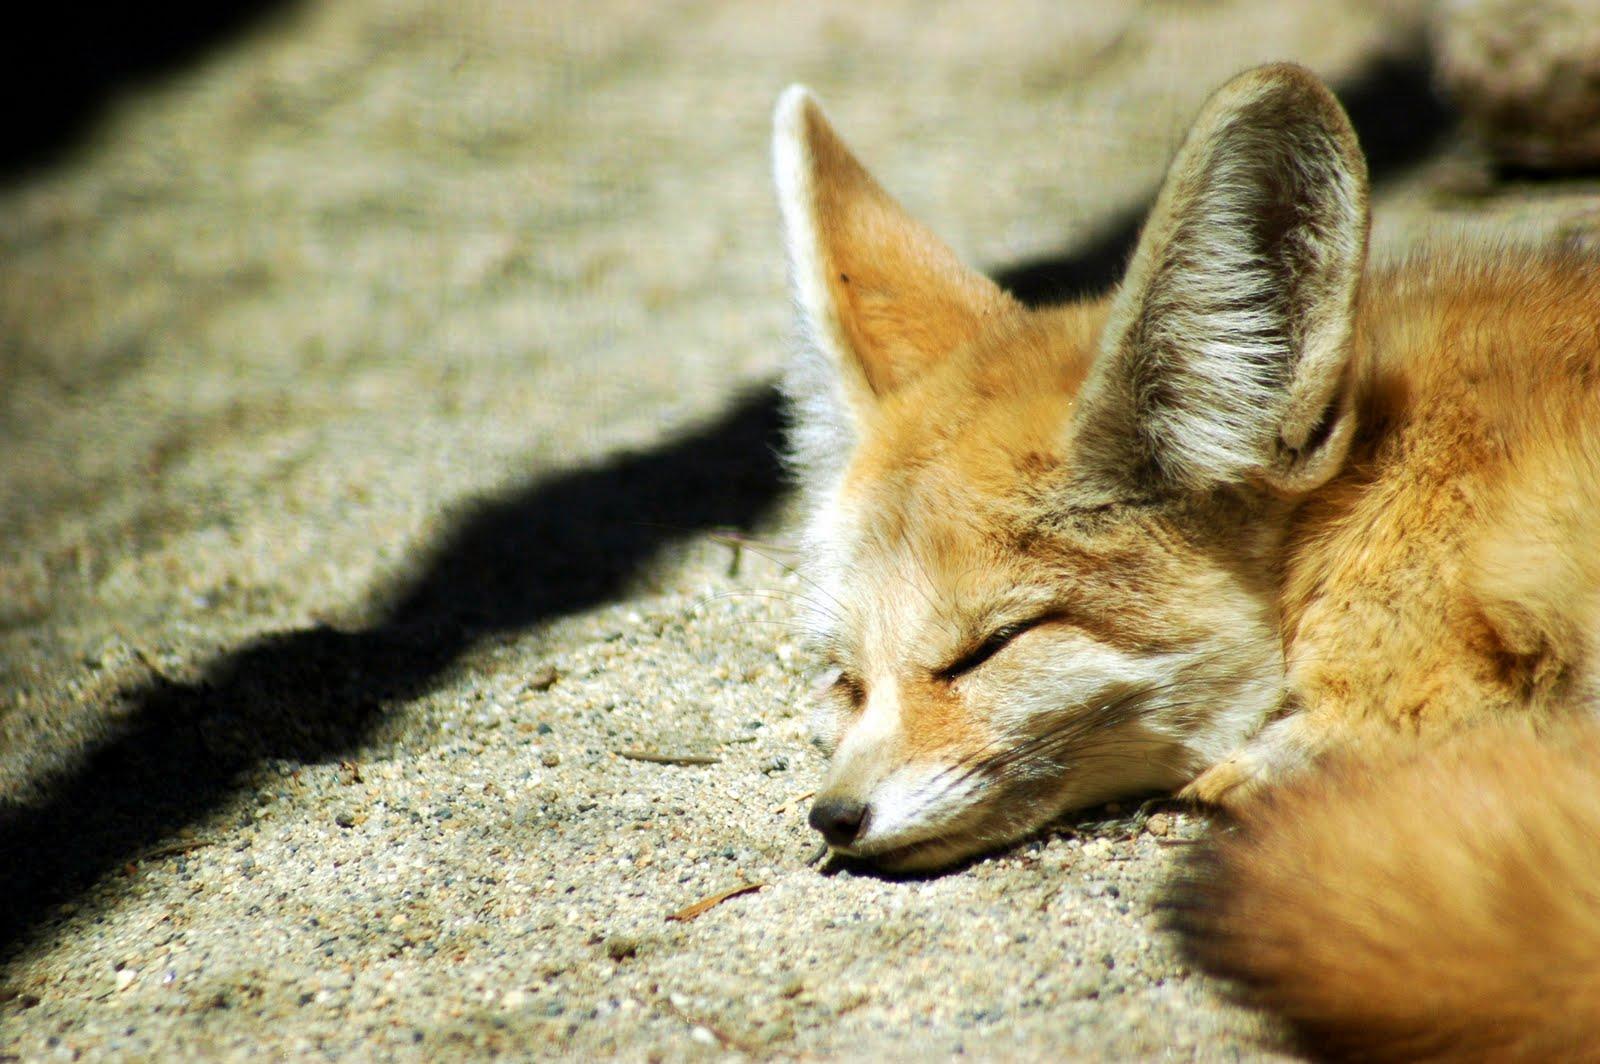 Cute fox photo download